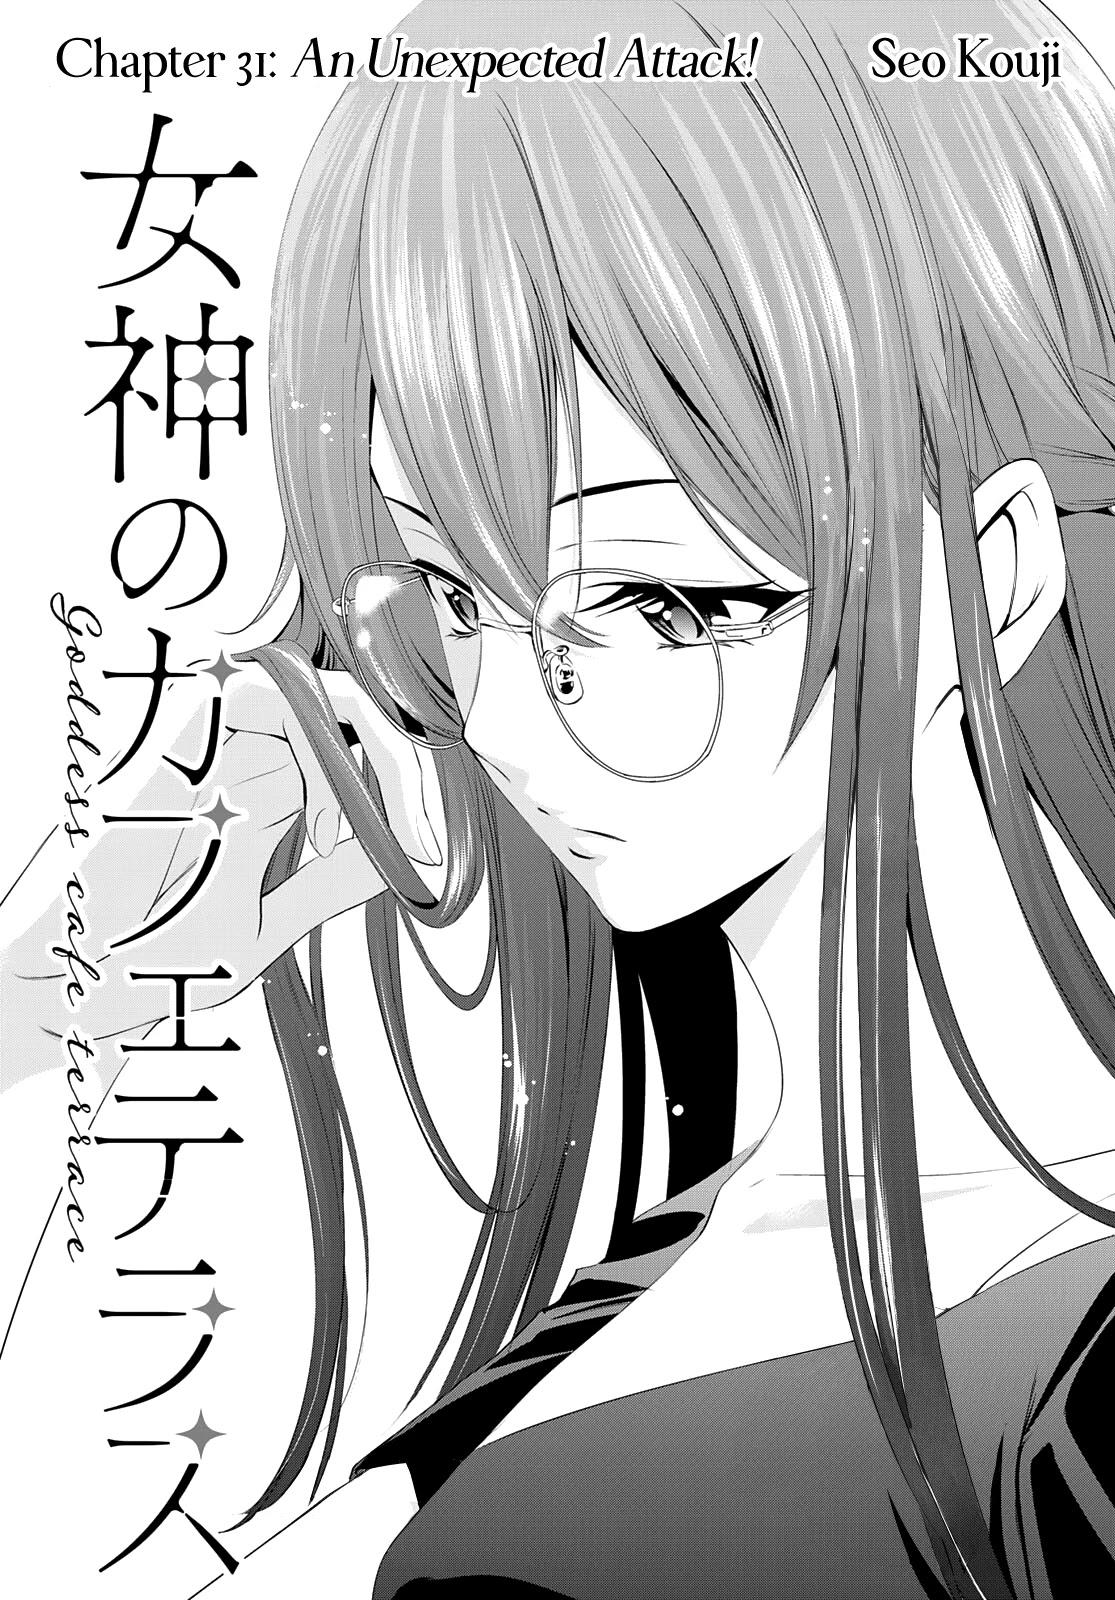 Megami no Café Terrace Capítulo 69 - Manga Online